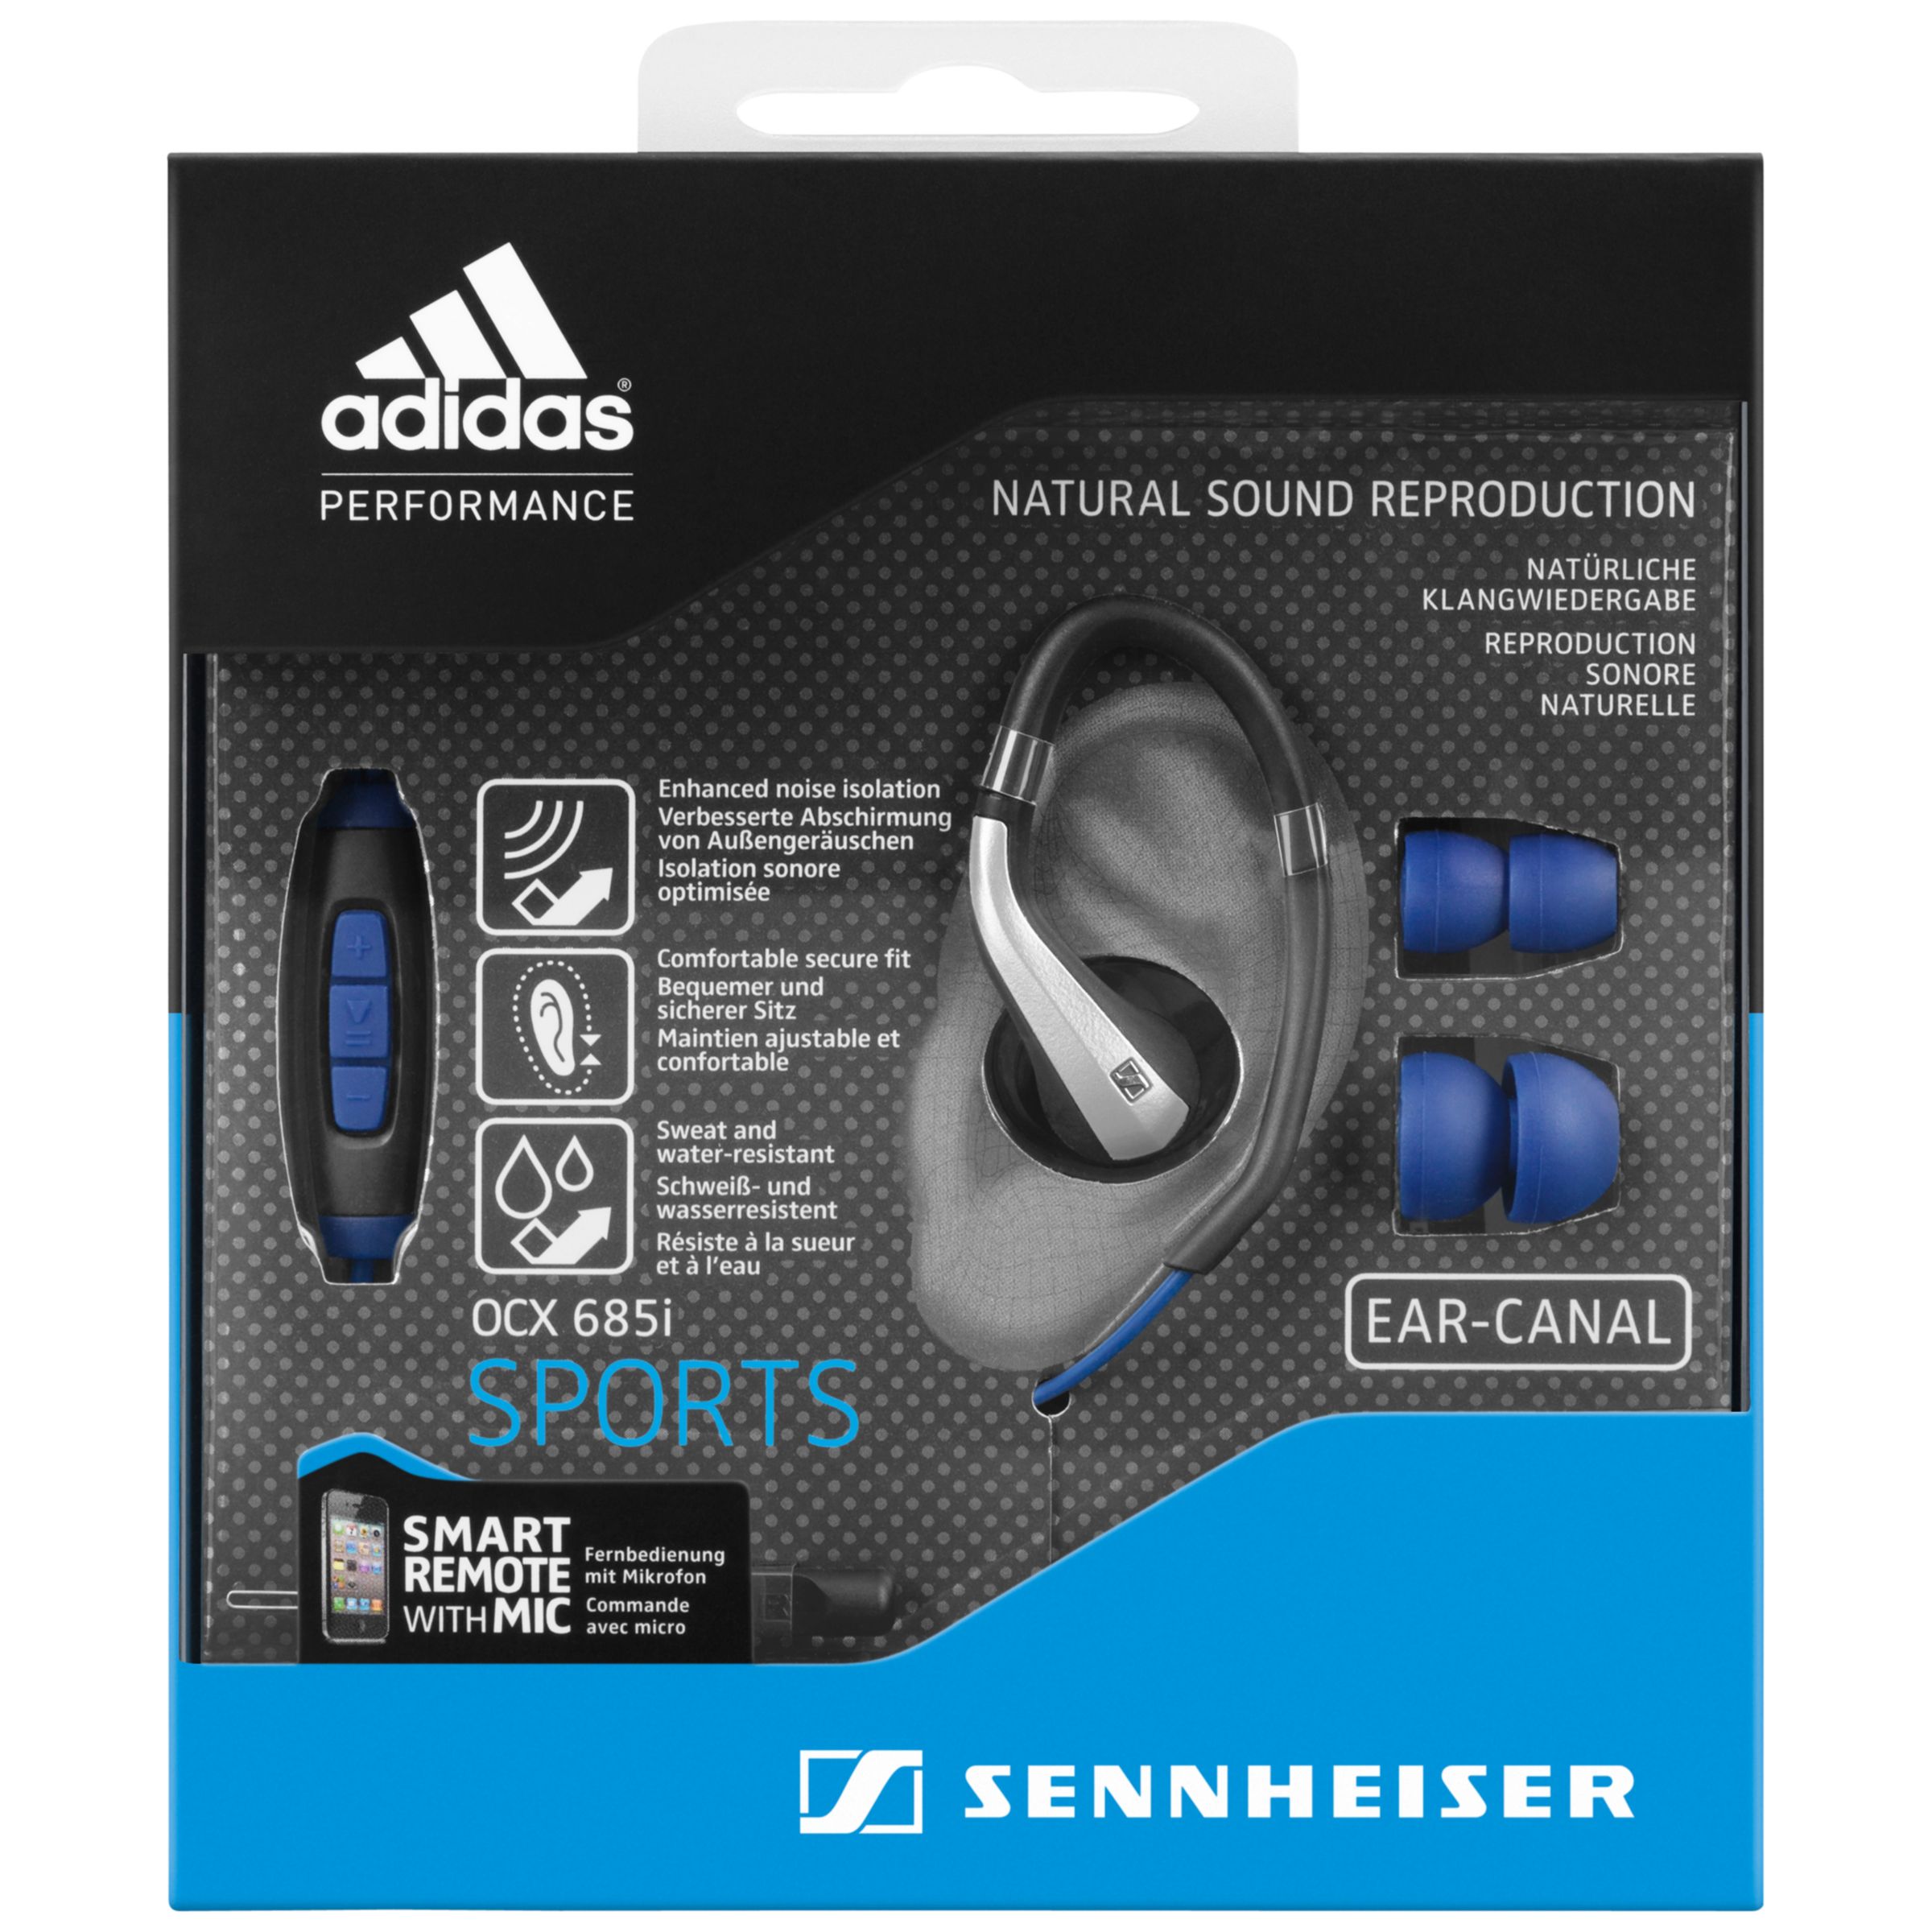 Sennheiser Adidas Ocx 685i Sports Around Ear Headphones With Remote Mic At John Lewis Partners